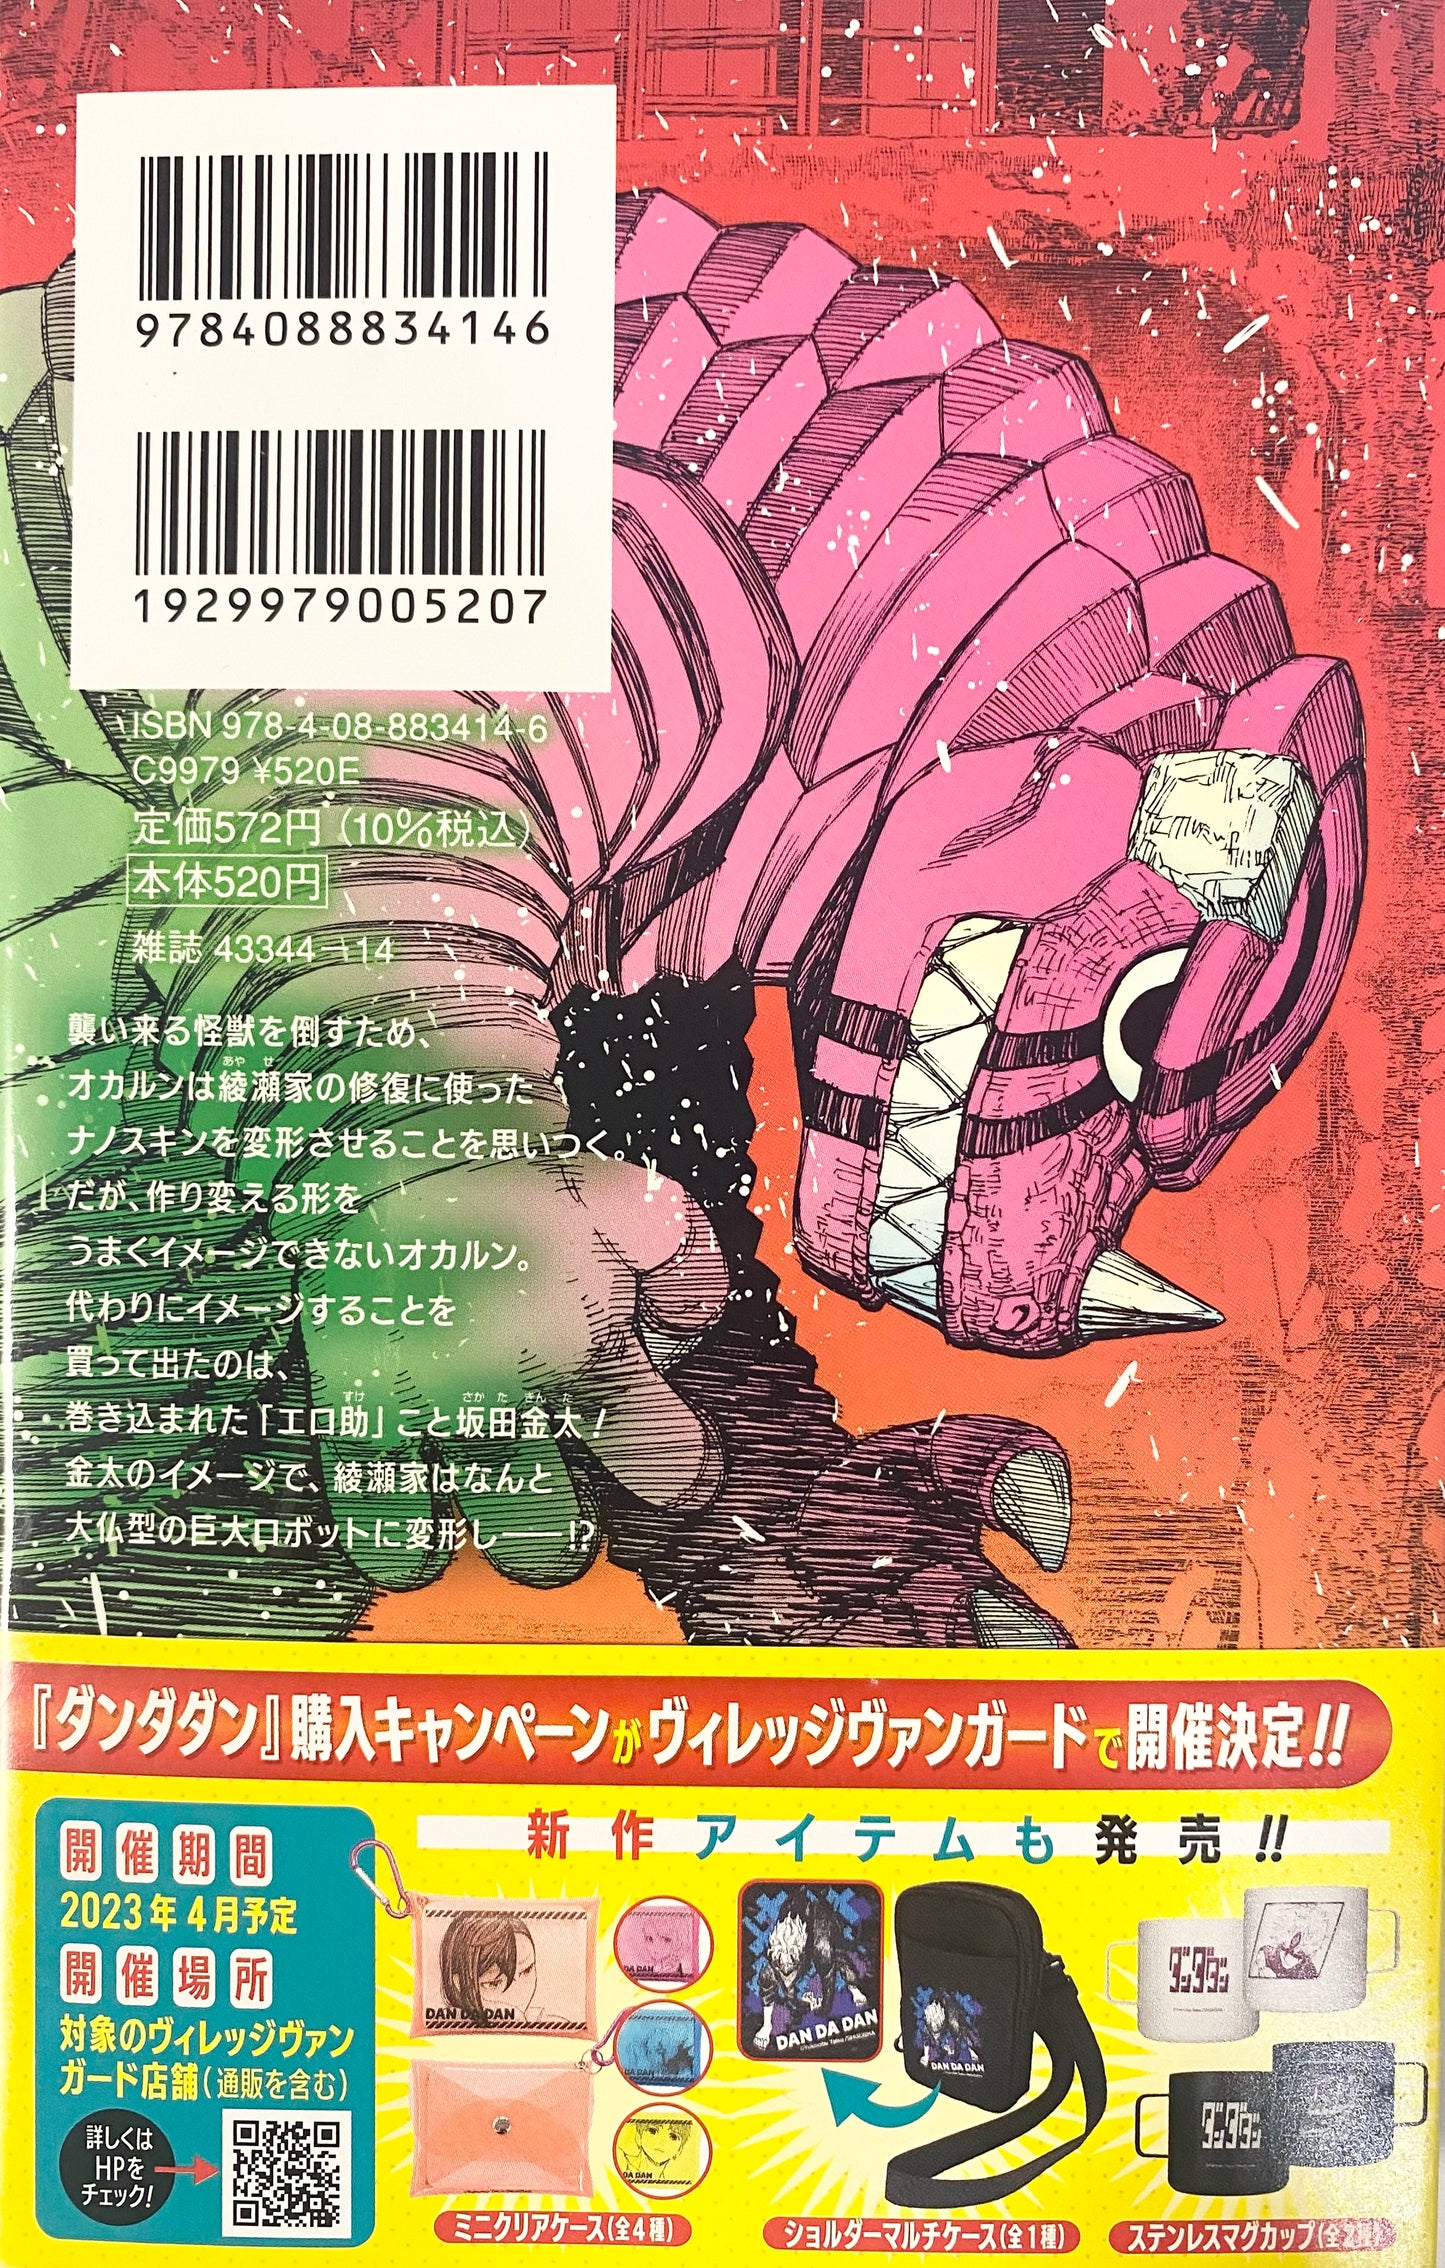 DanDaDan Vol.9-Official Japanese Edition